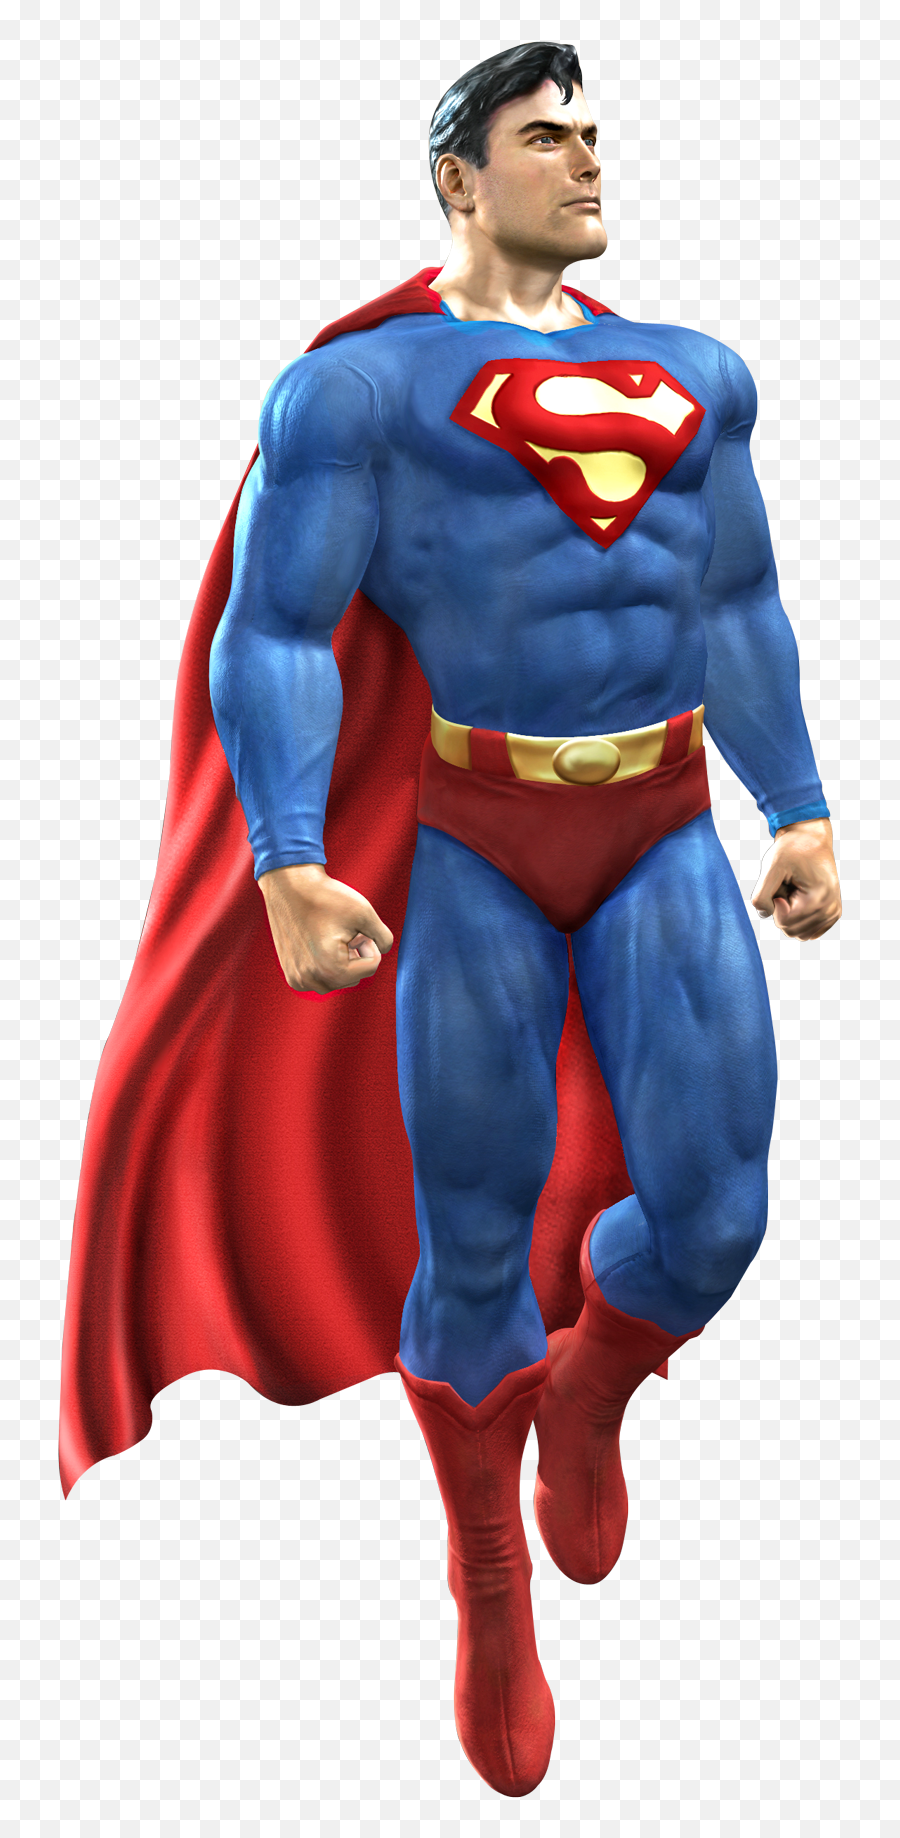 Png Transparent Superhero - Superman Mortal Kombat Vs Dc Universe,Superhero Png